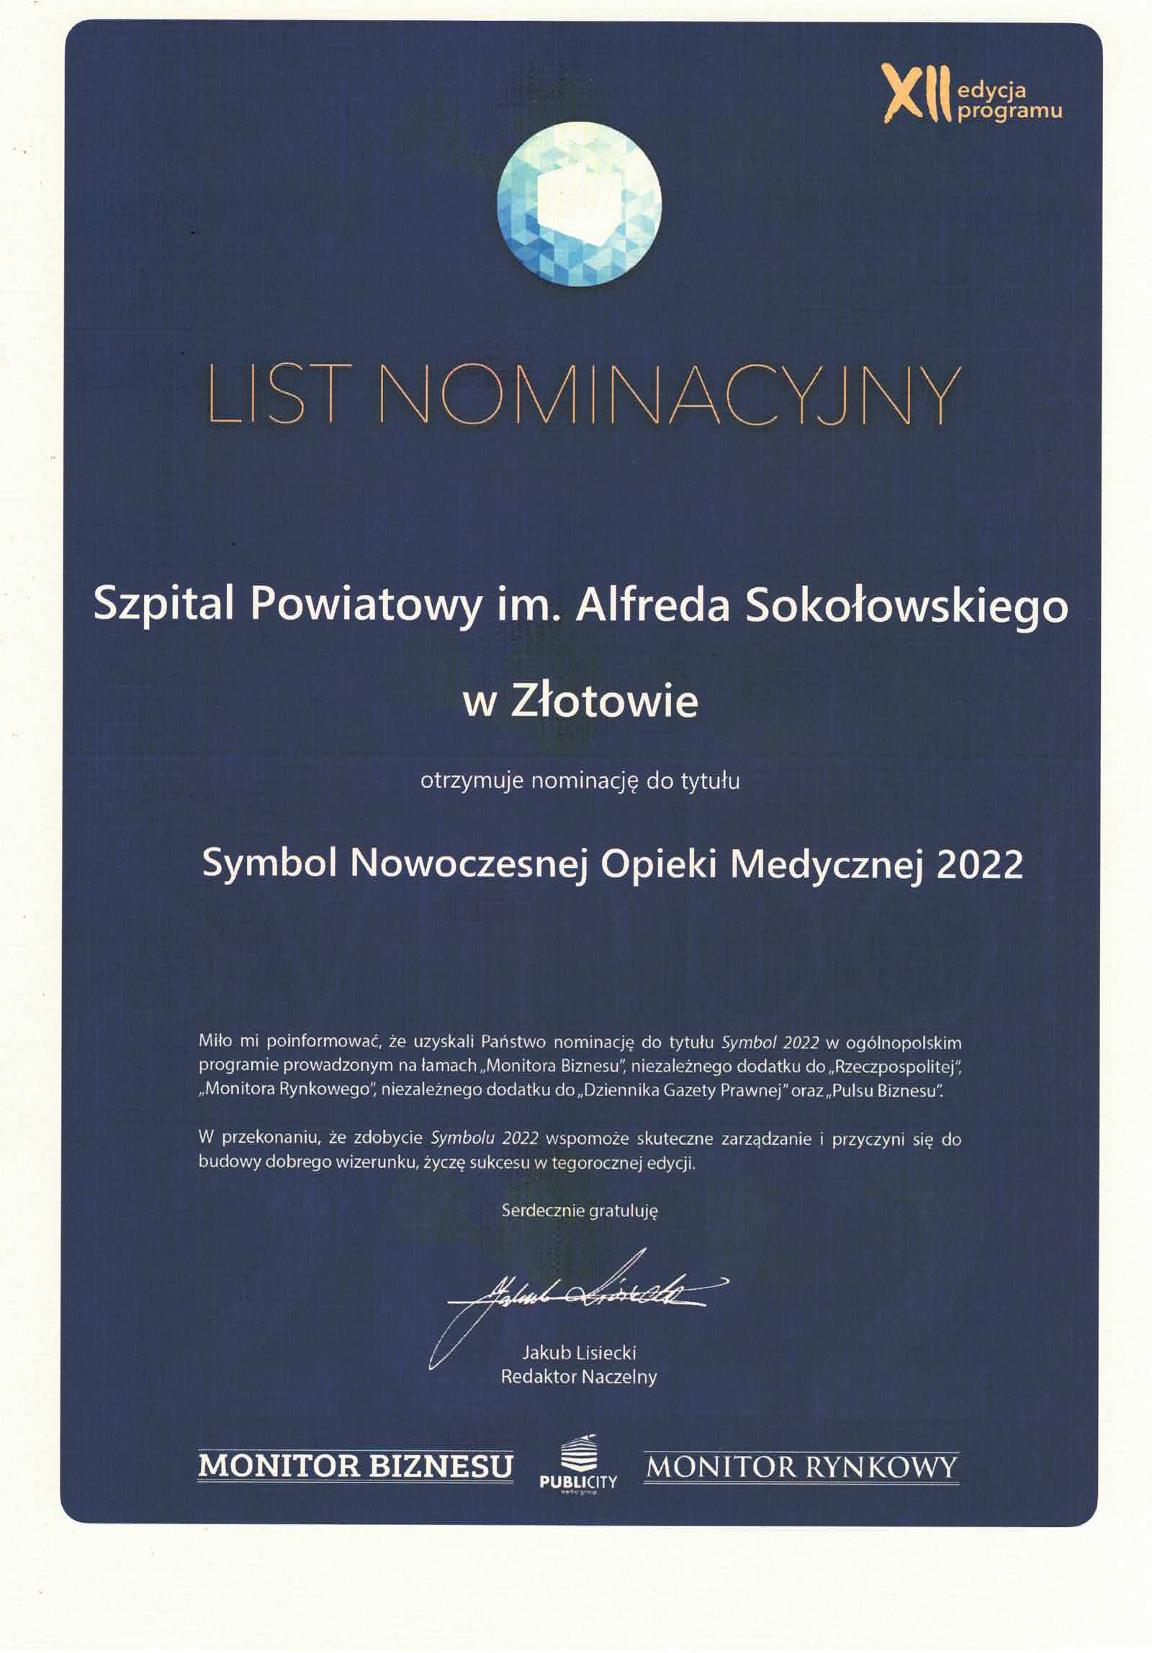 List nominacyjny Now opieka med